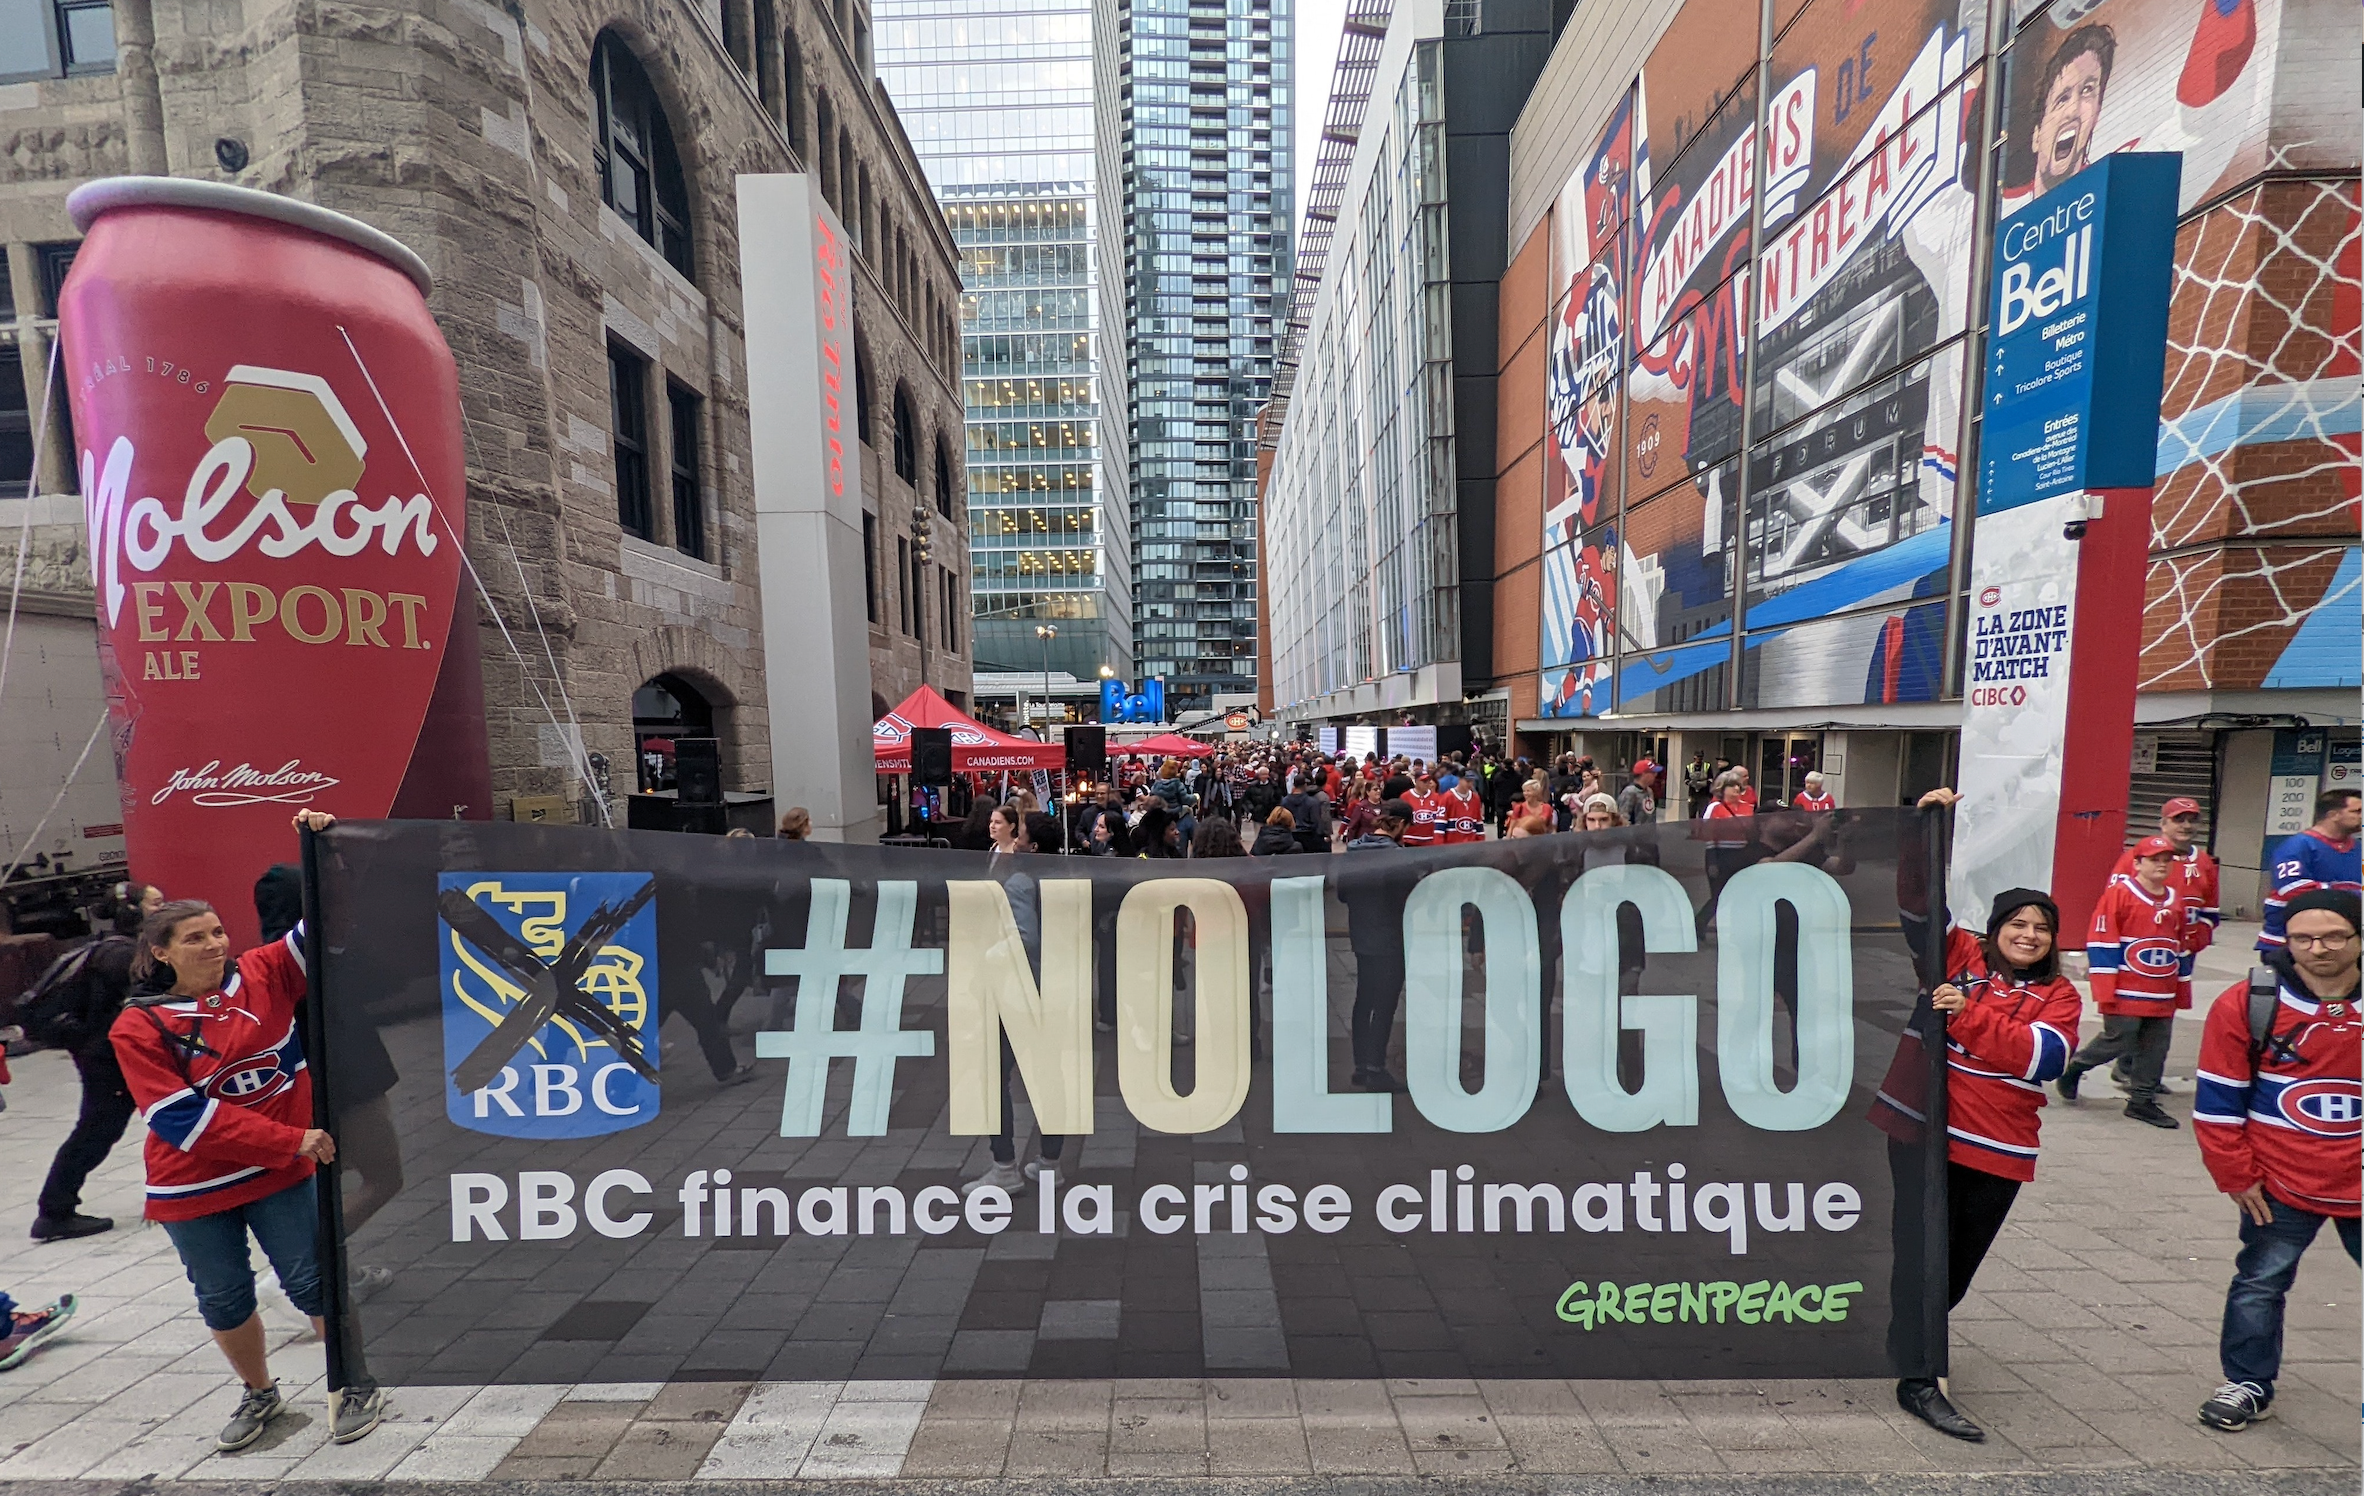 Huge pushback in Quebec for RBC logo on “holy” Habs jersey